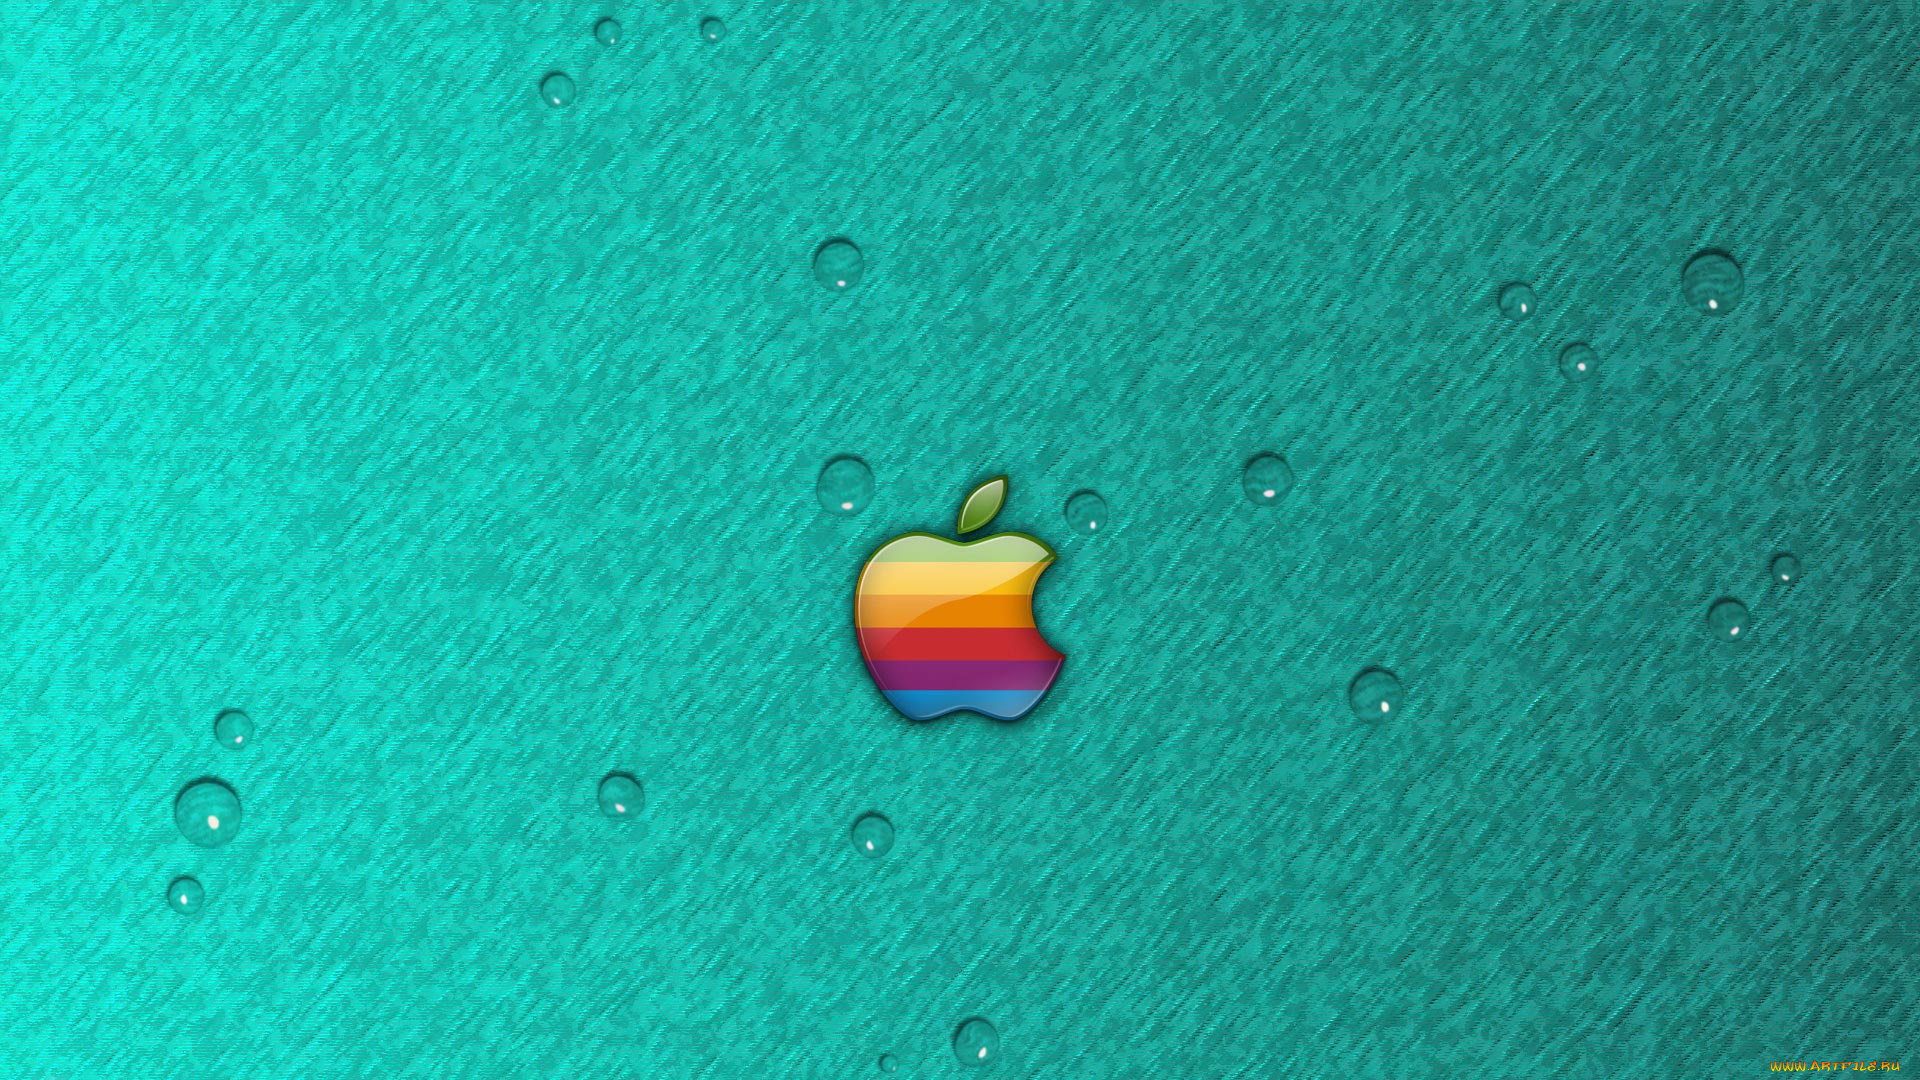 компьютеры, apple, фон, логотип, яблоко, цвета, капли